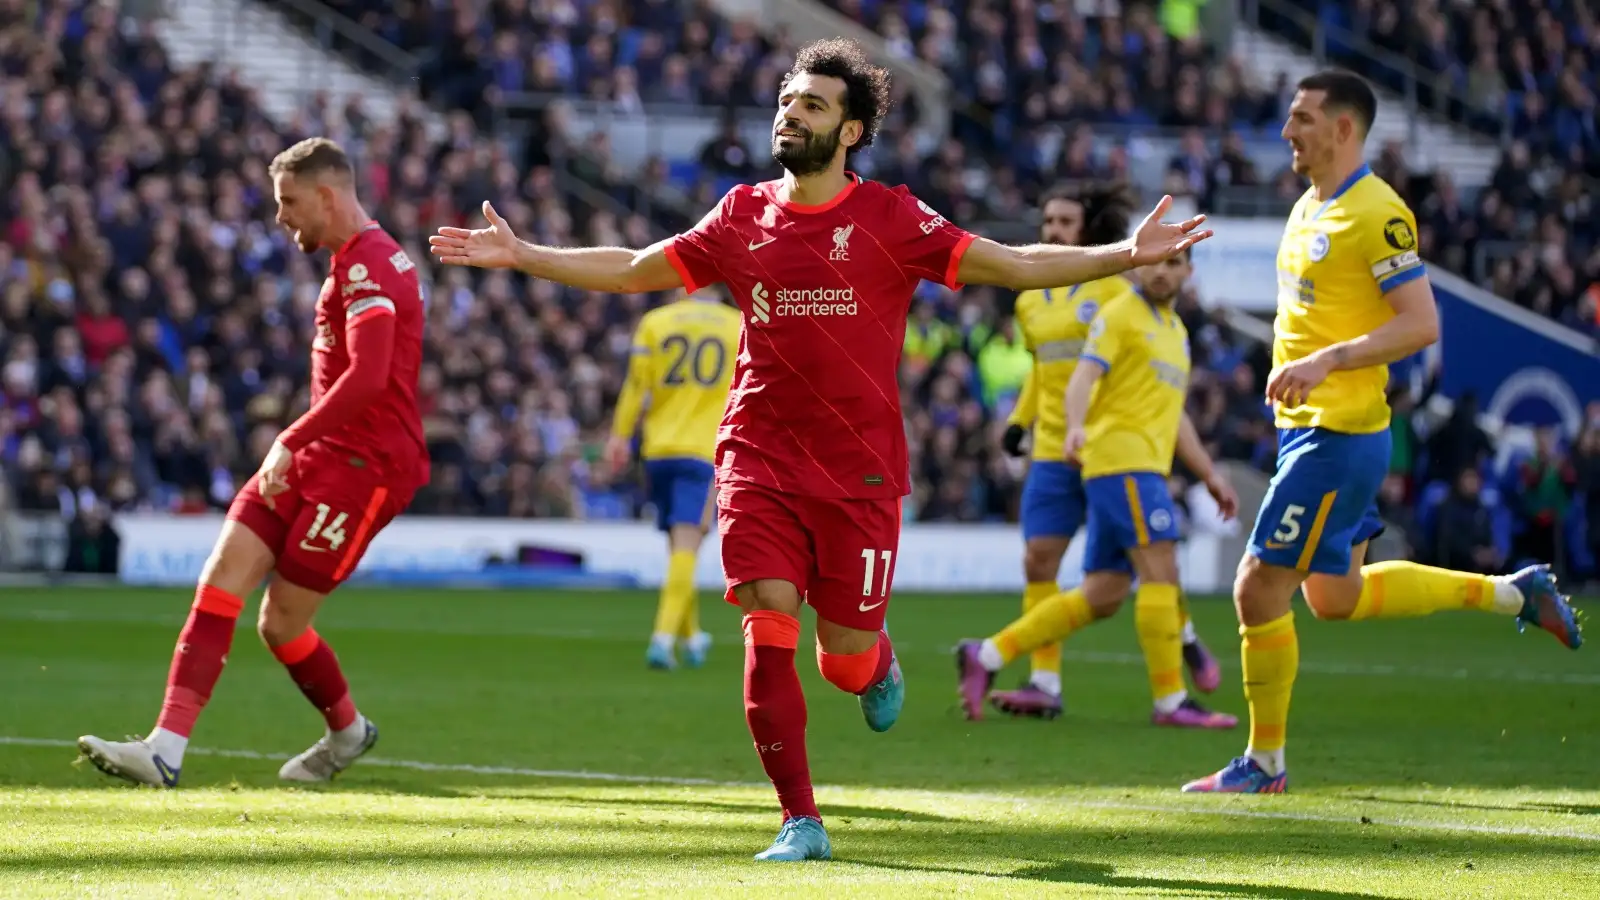 Liverpool striker Mo Salah celebrates scoring a goal